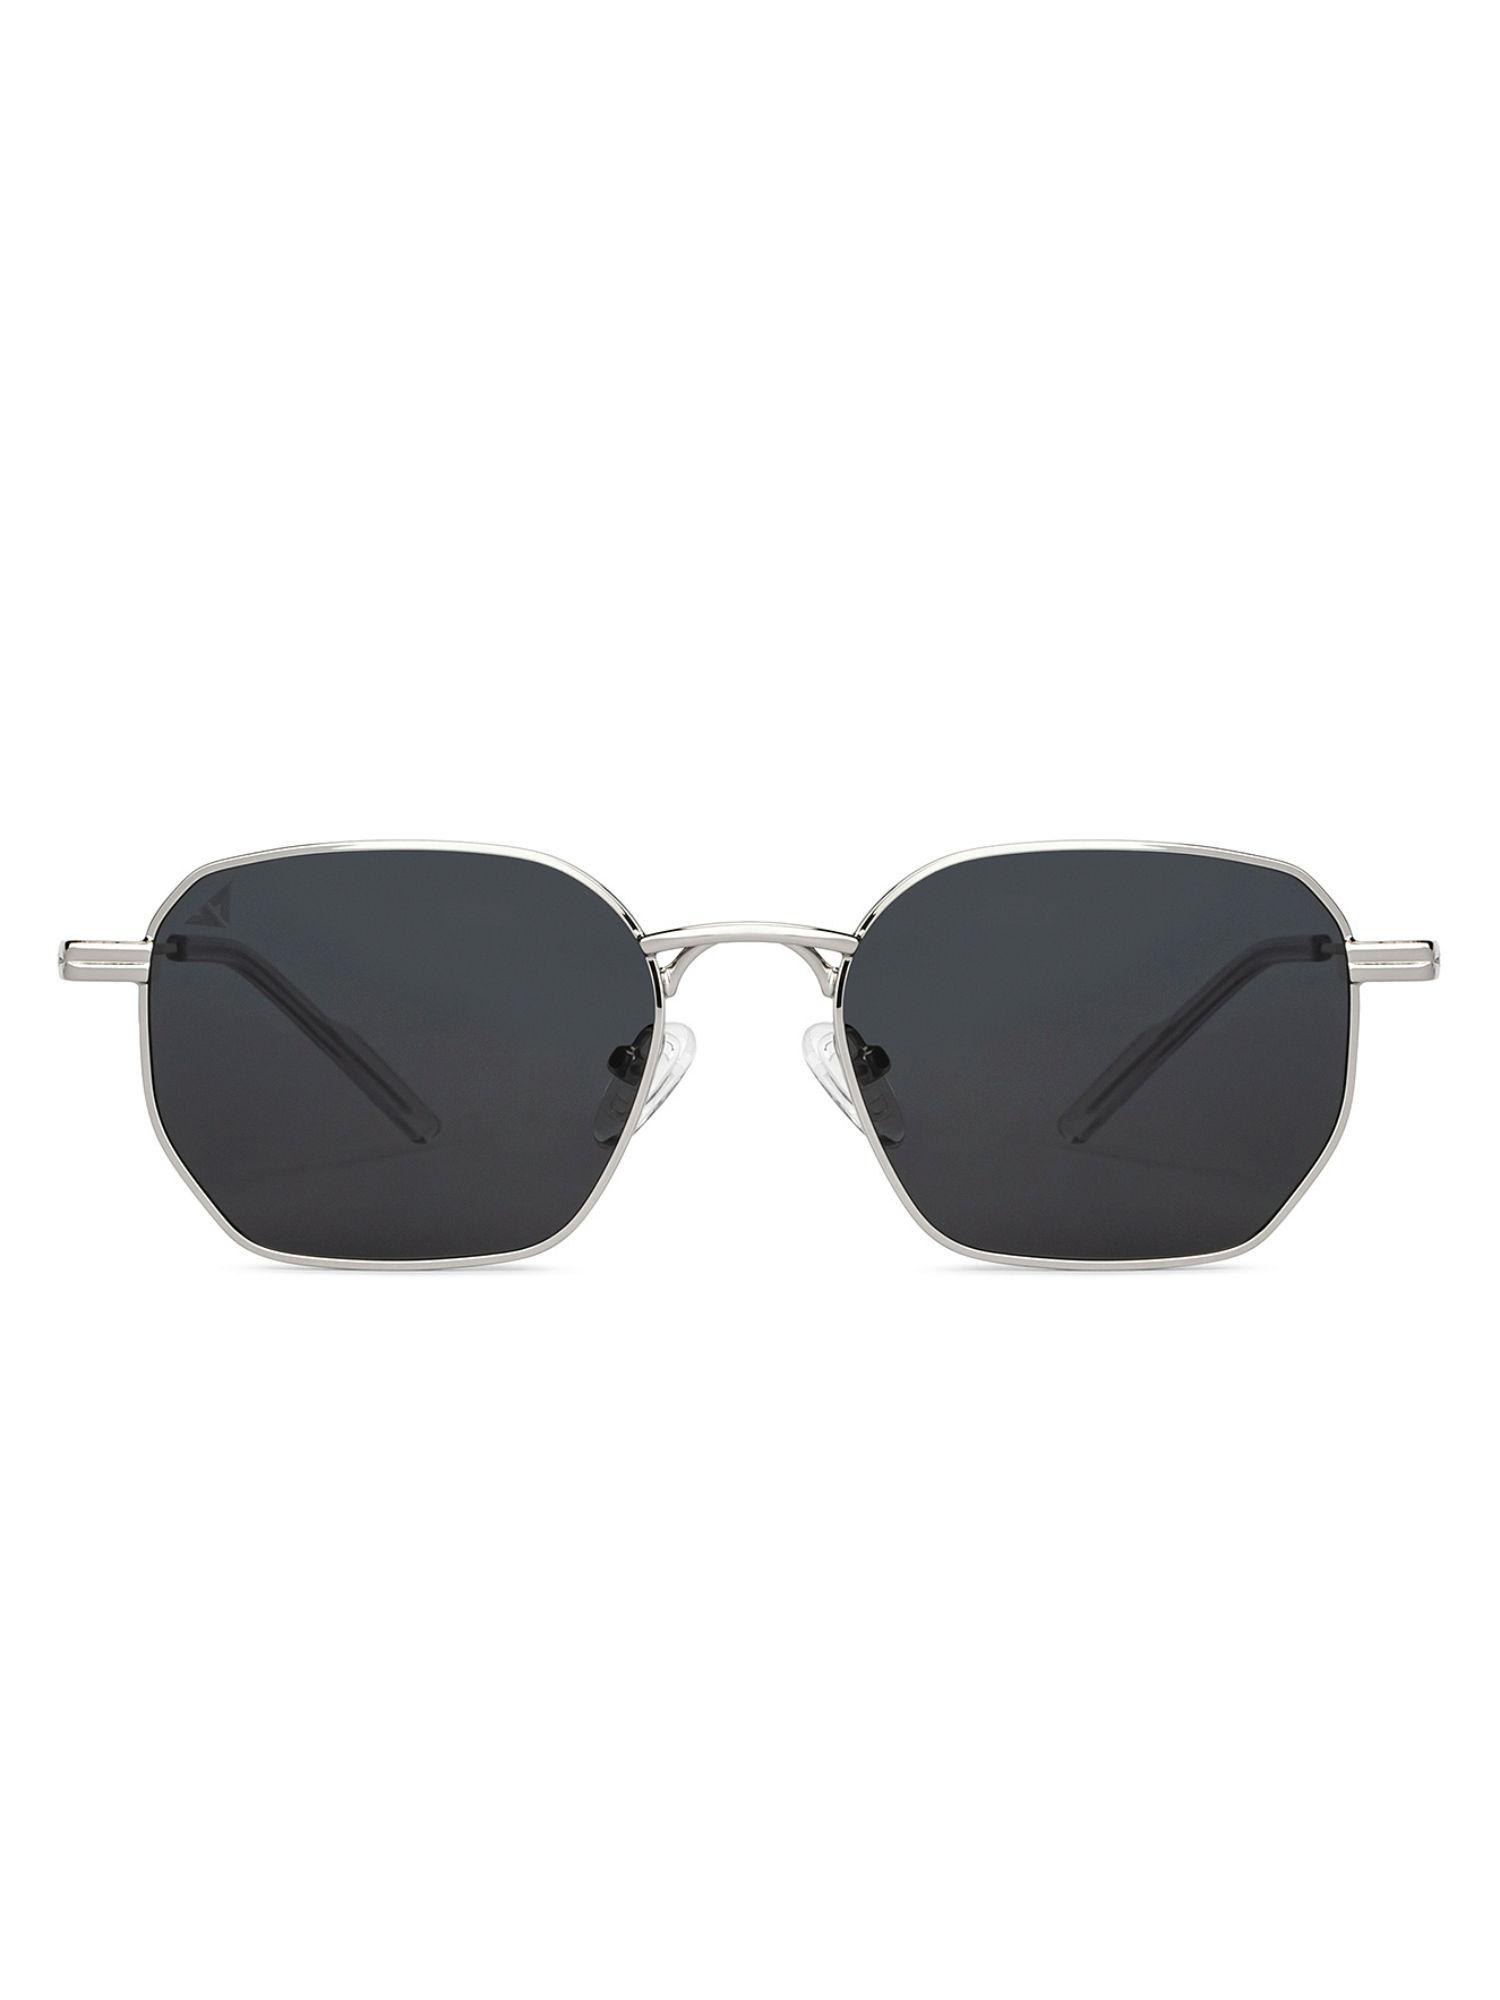 by lenskart silver grey small geometric sunglasses - vc s14463